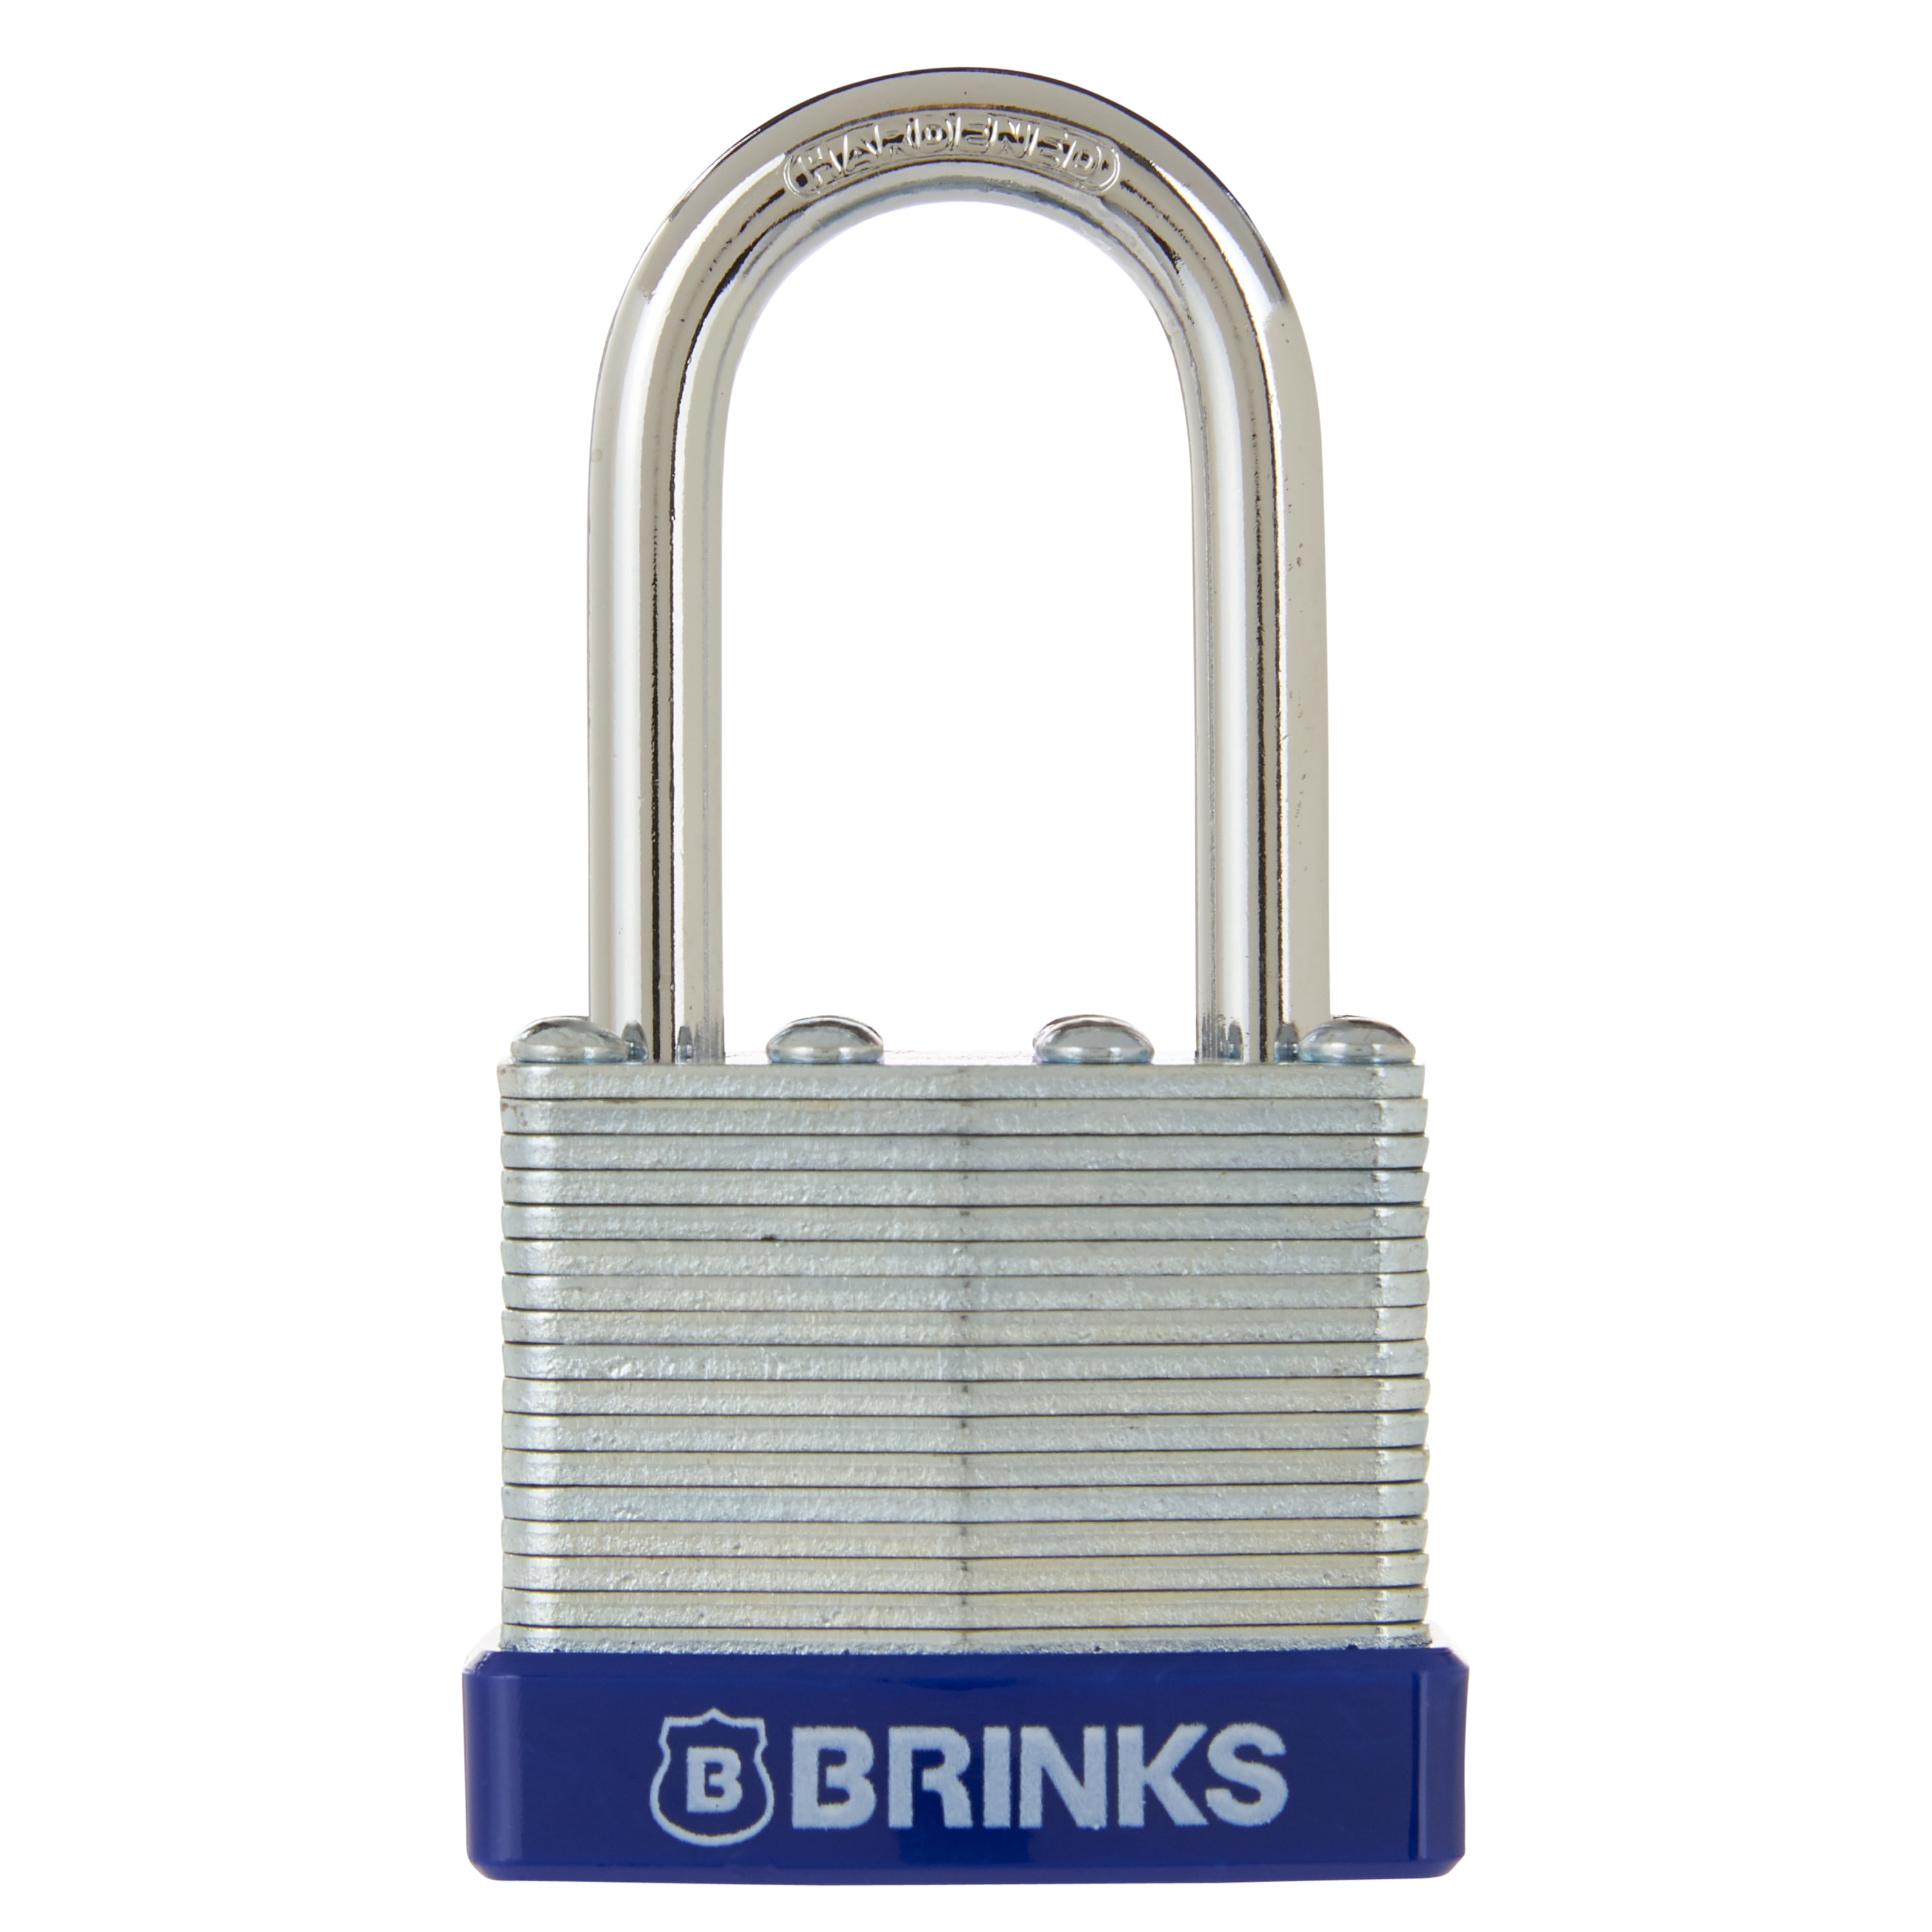 Closed Shackle 50mm Top Security 3 Key Padlock Gate Garage Lock 